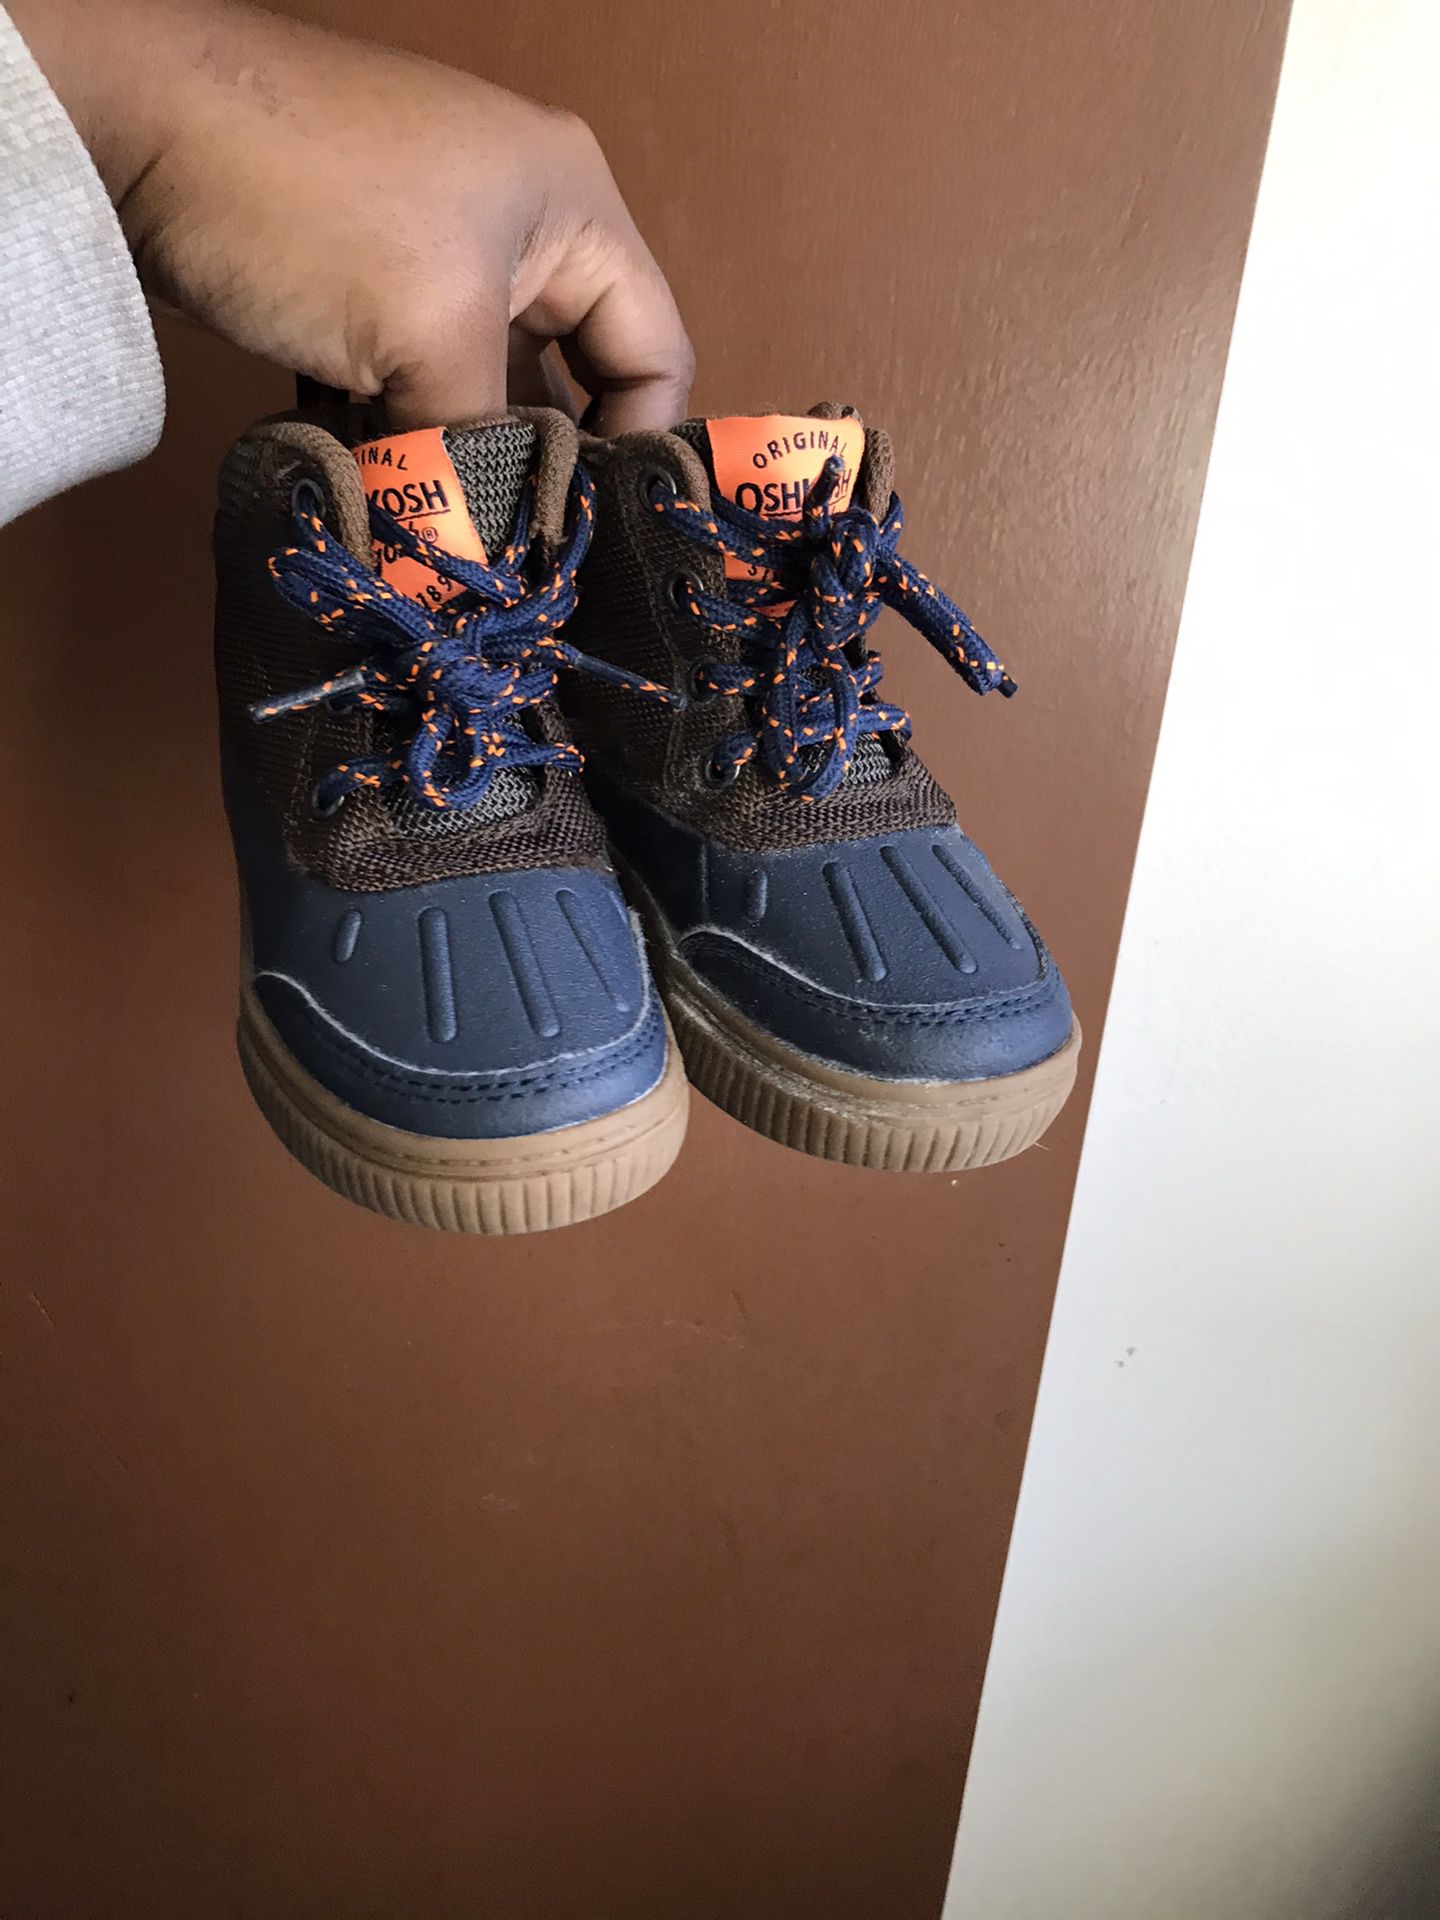 Kids Size 7 OshKosh B’gosh snow Boots